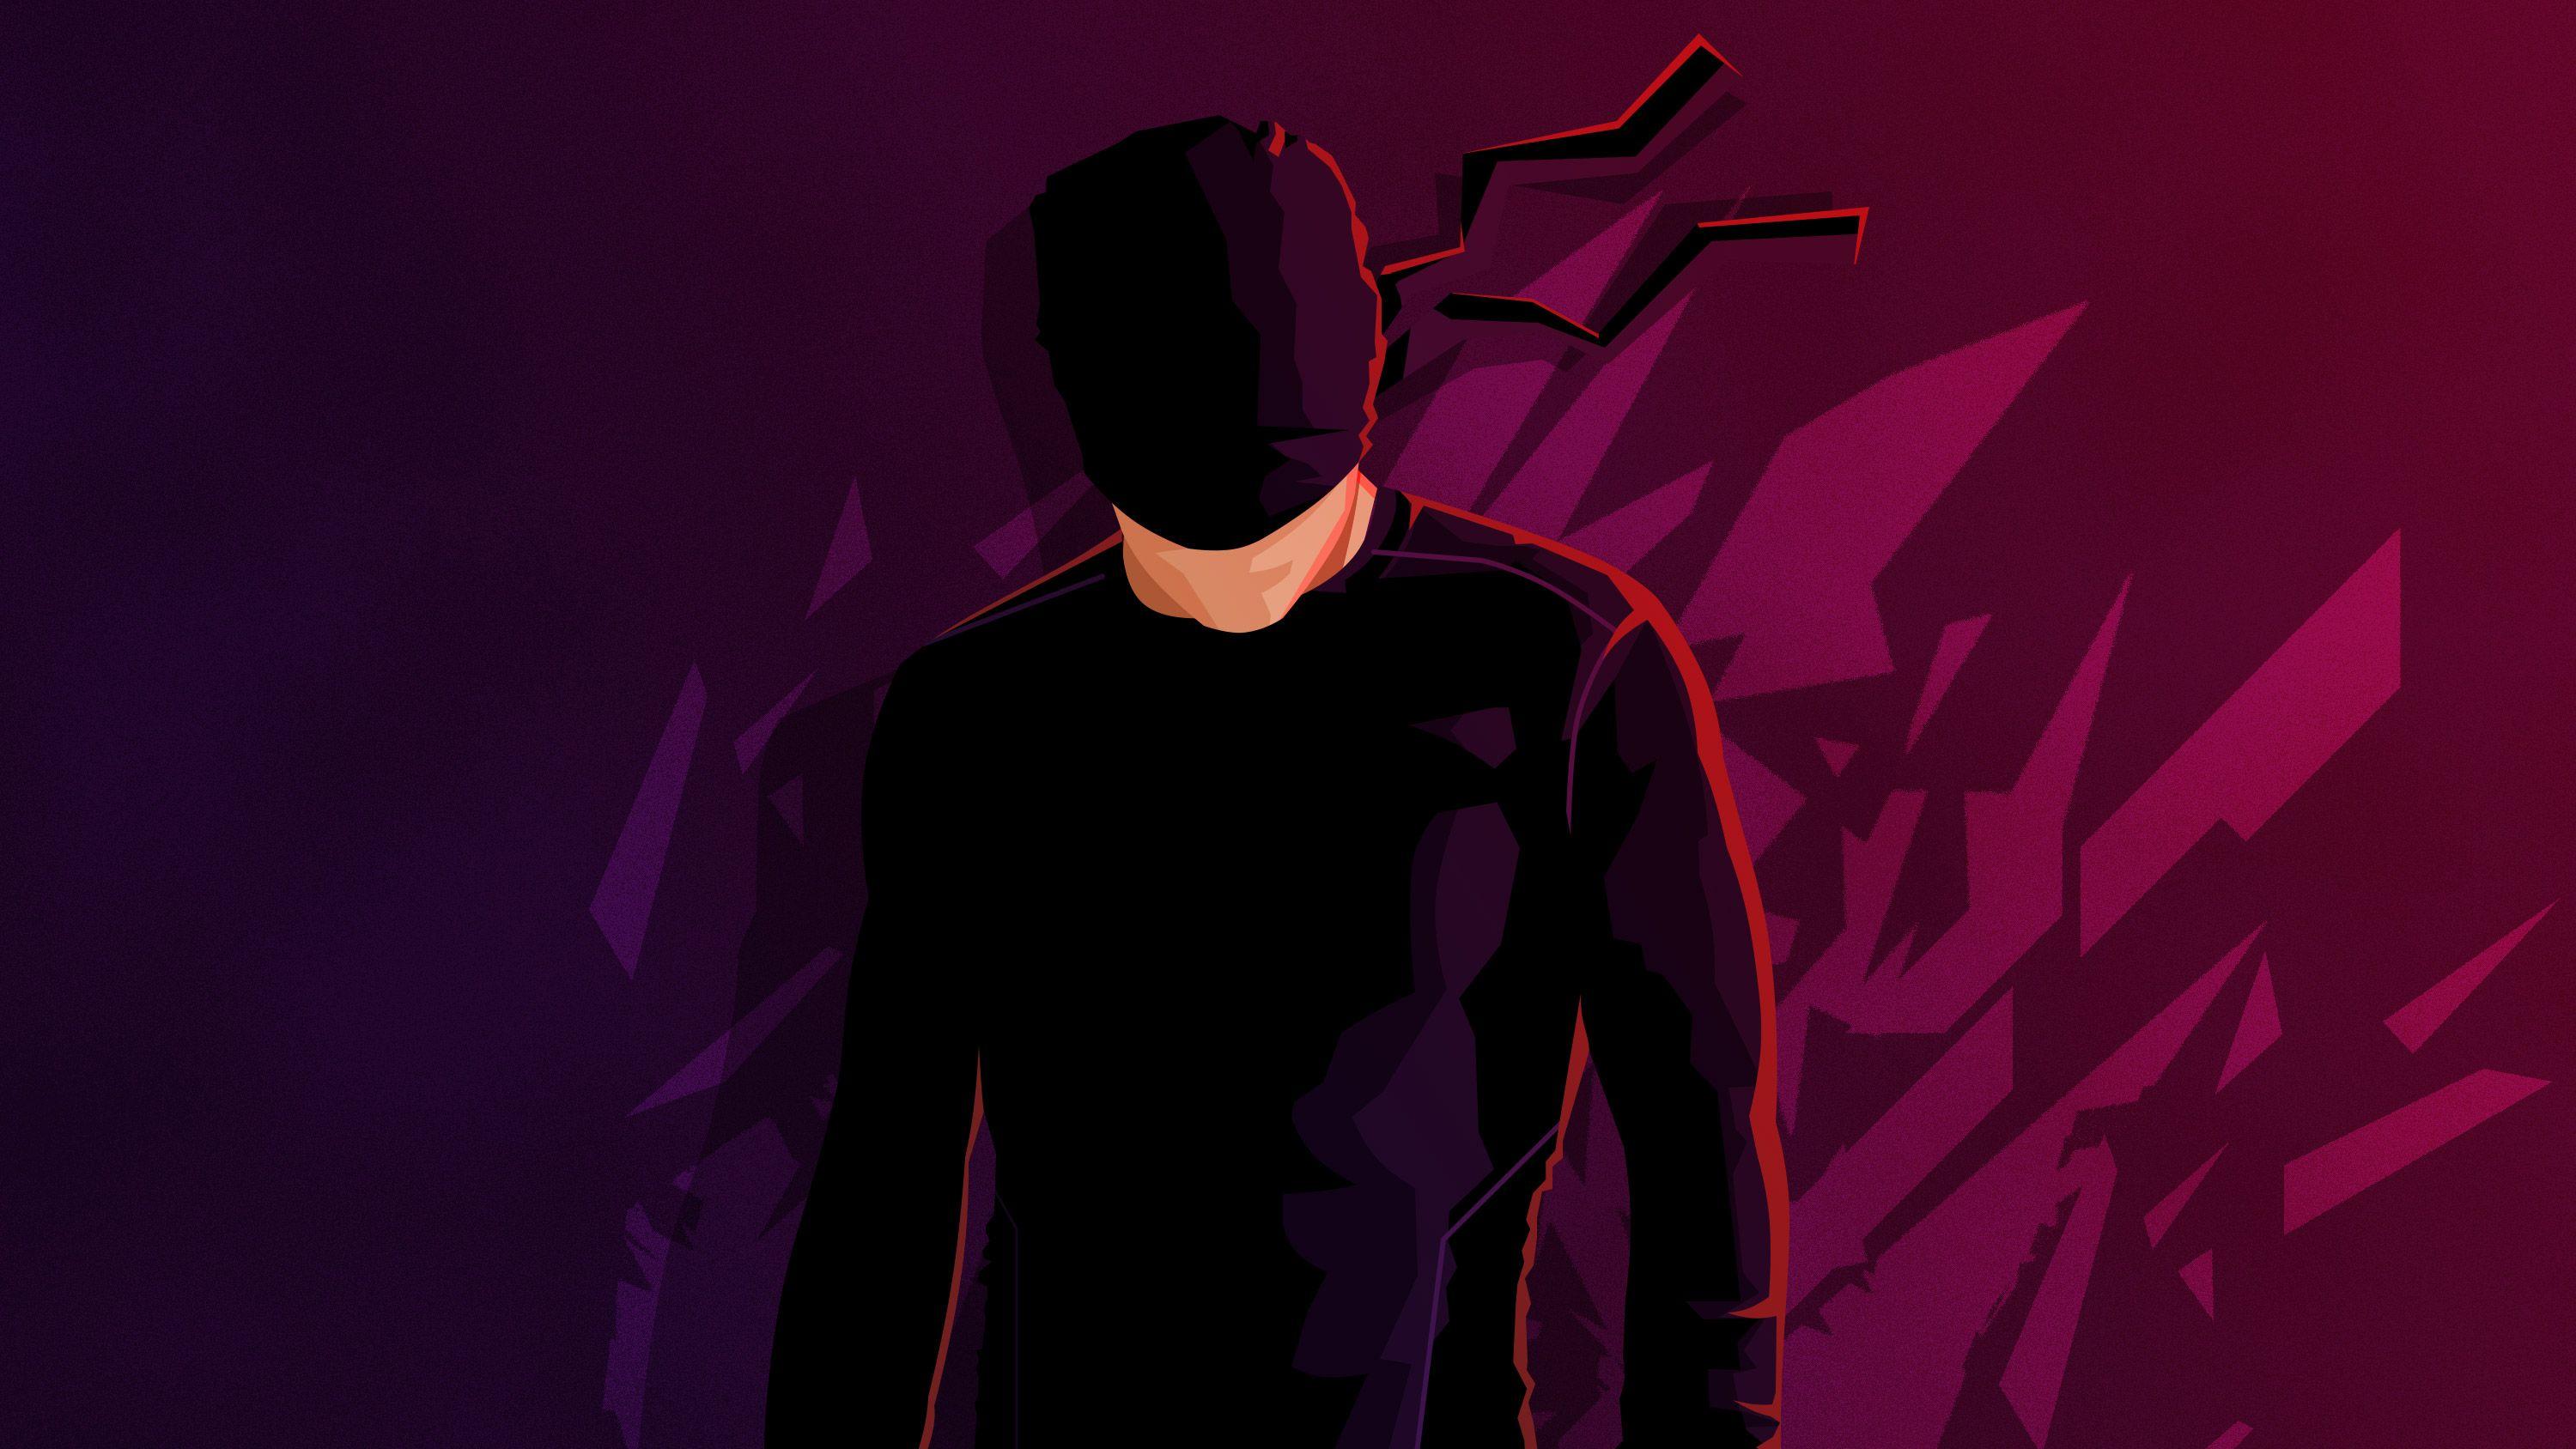 Daredevil Minimalism Hd, HD Superheroes, 4k Wallpaper, Image